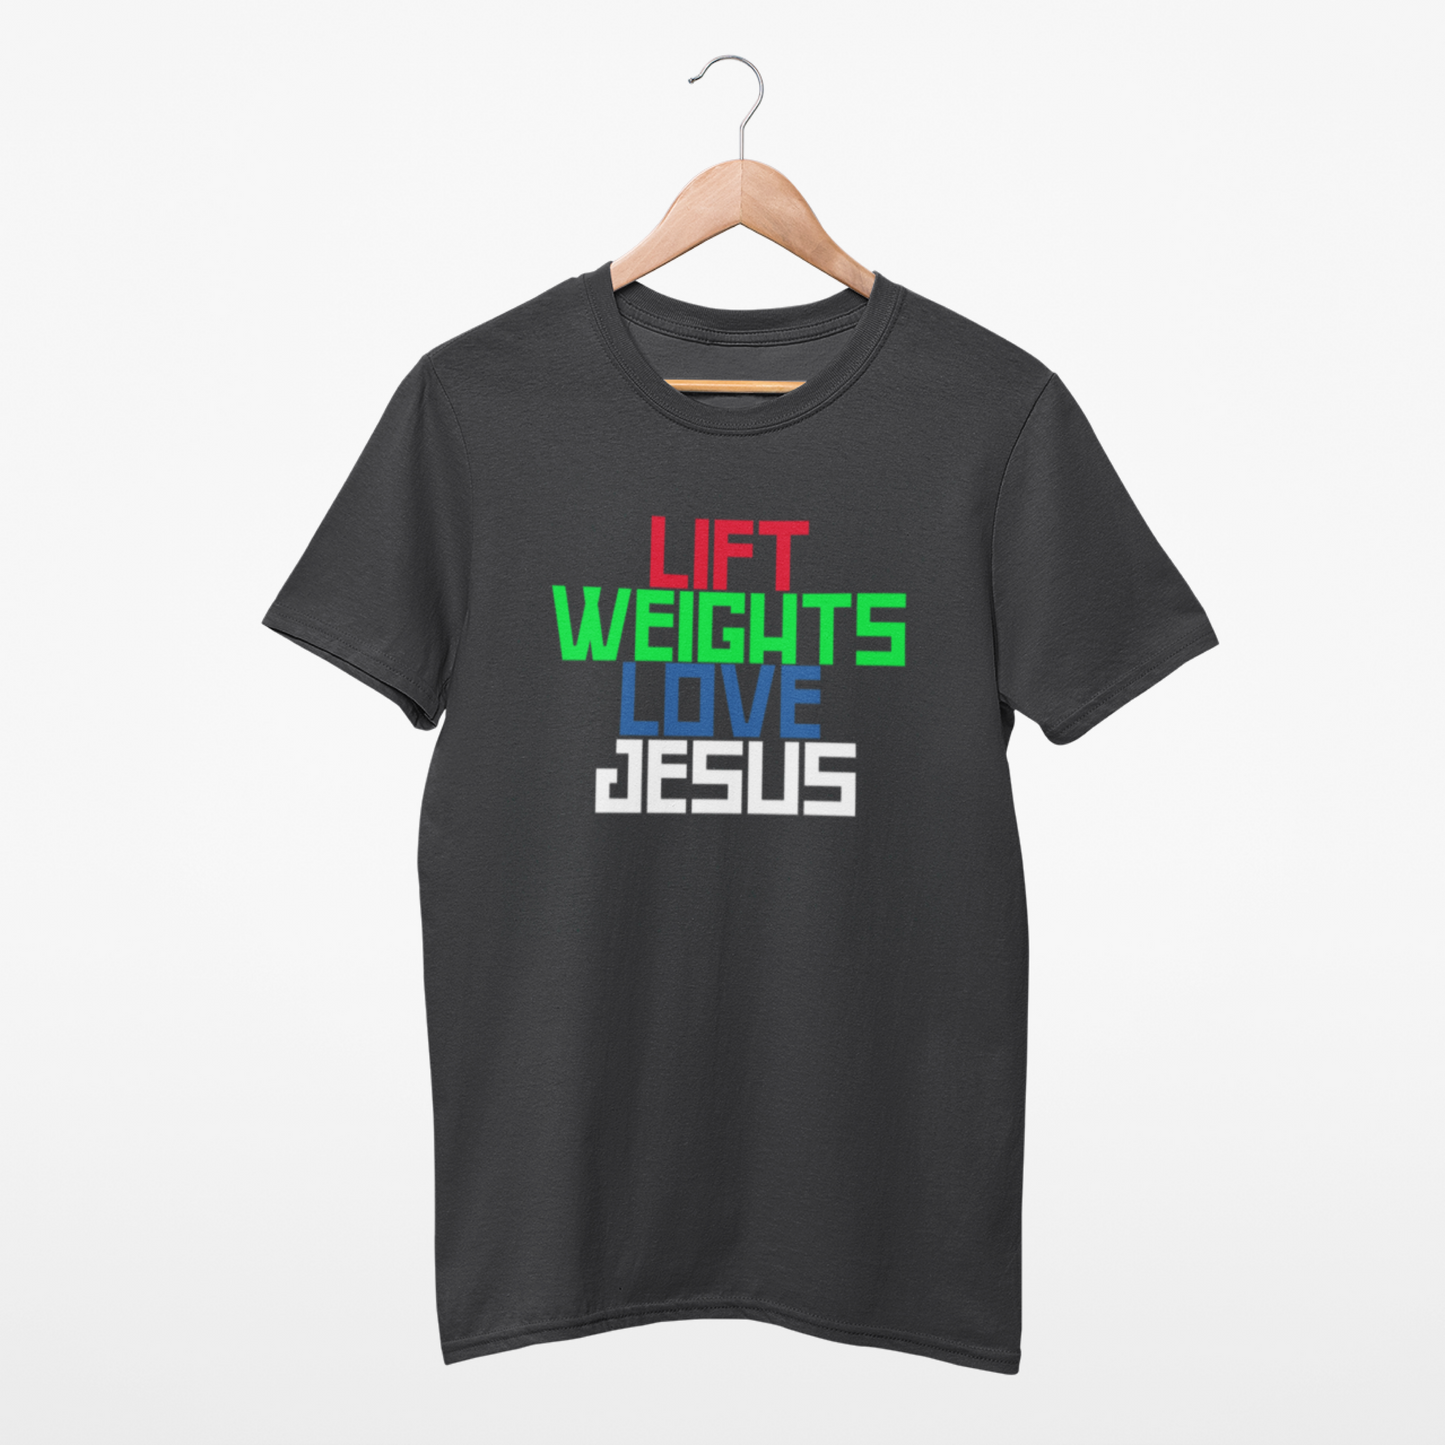 Holy Gainz Apparel “Lift Weights Love Jesus” Unisex Tee